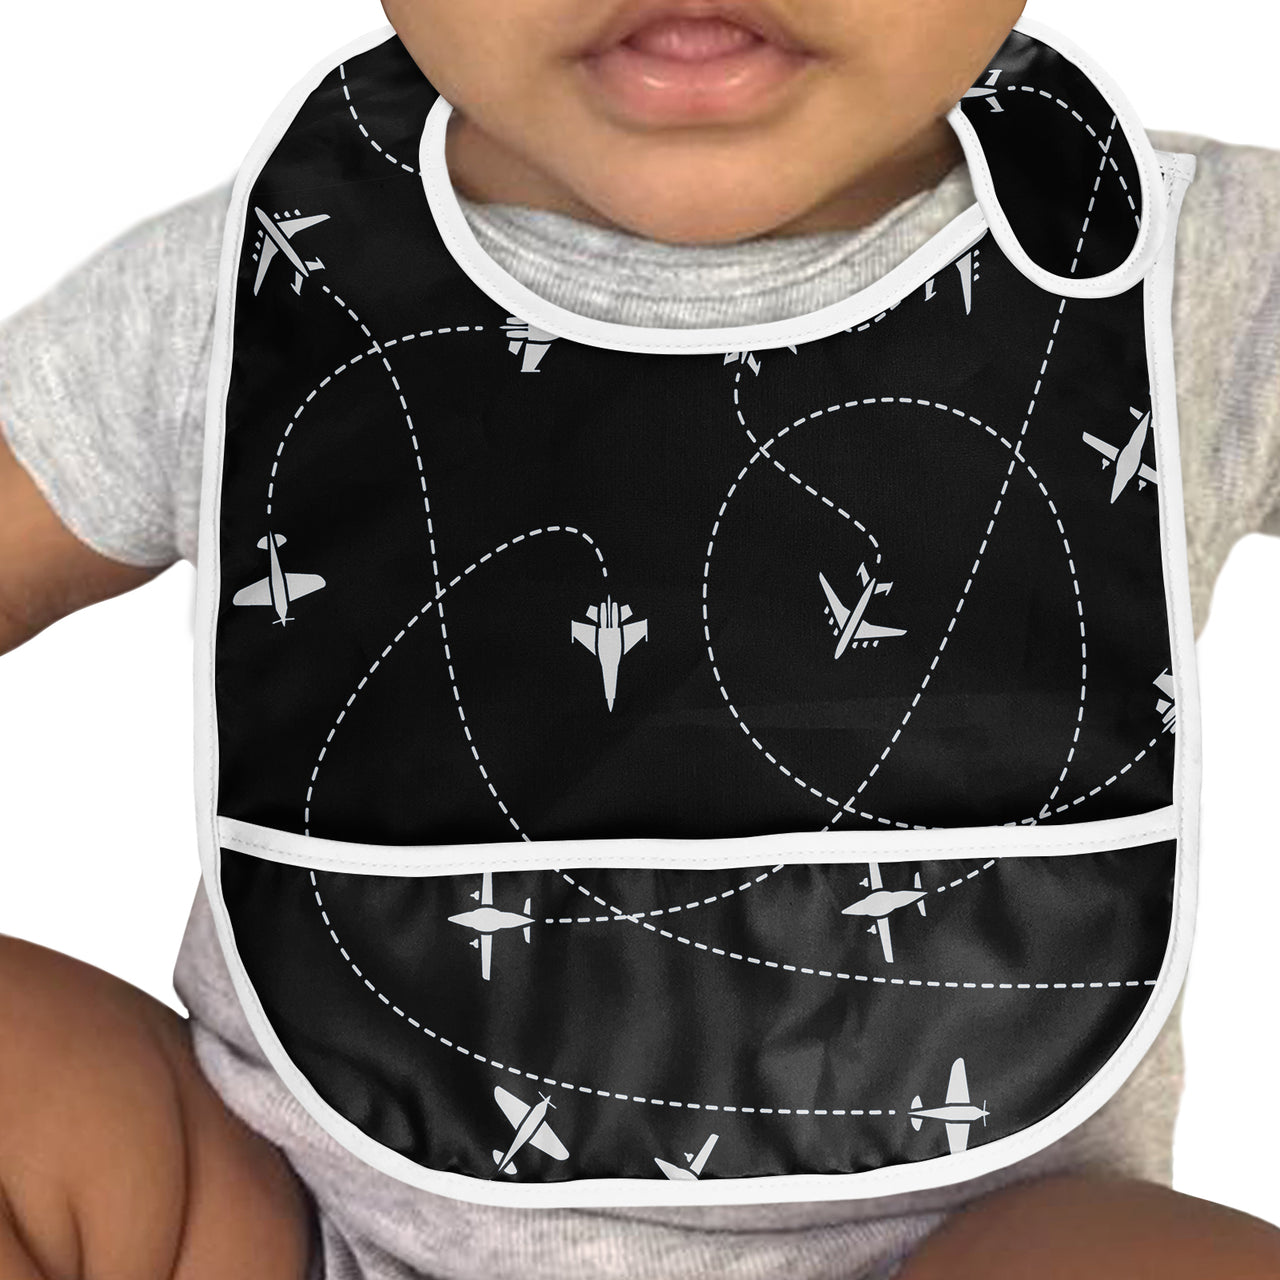 Travel The World By Plane (Black) Designed Baby Bib